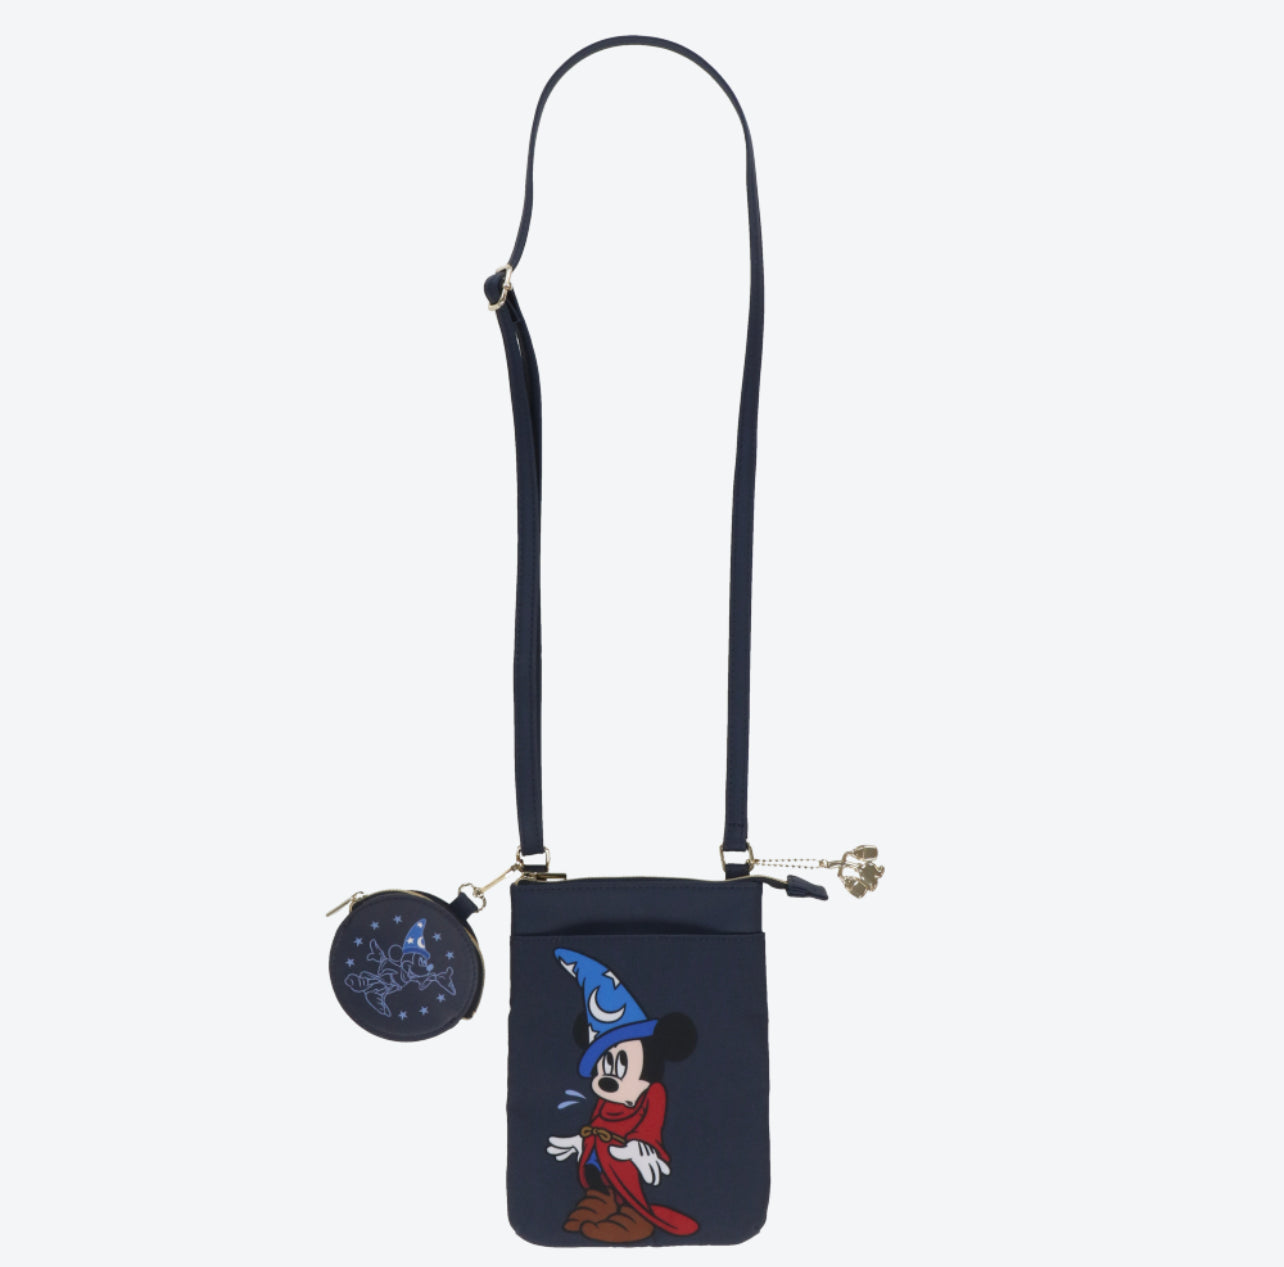 TDR - Disney Movie "Fantasia" Collection x Mickey Mouse "Fantasia" Shoulder Bag